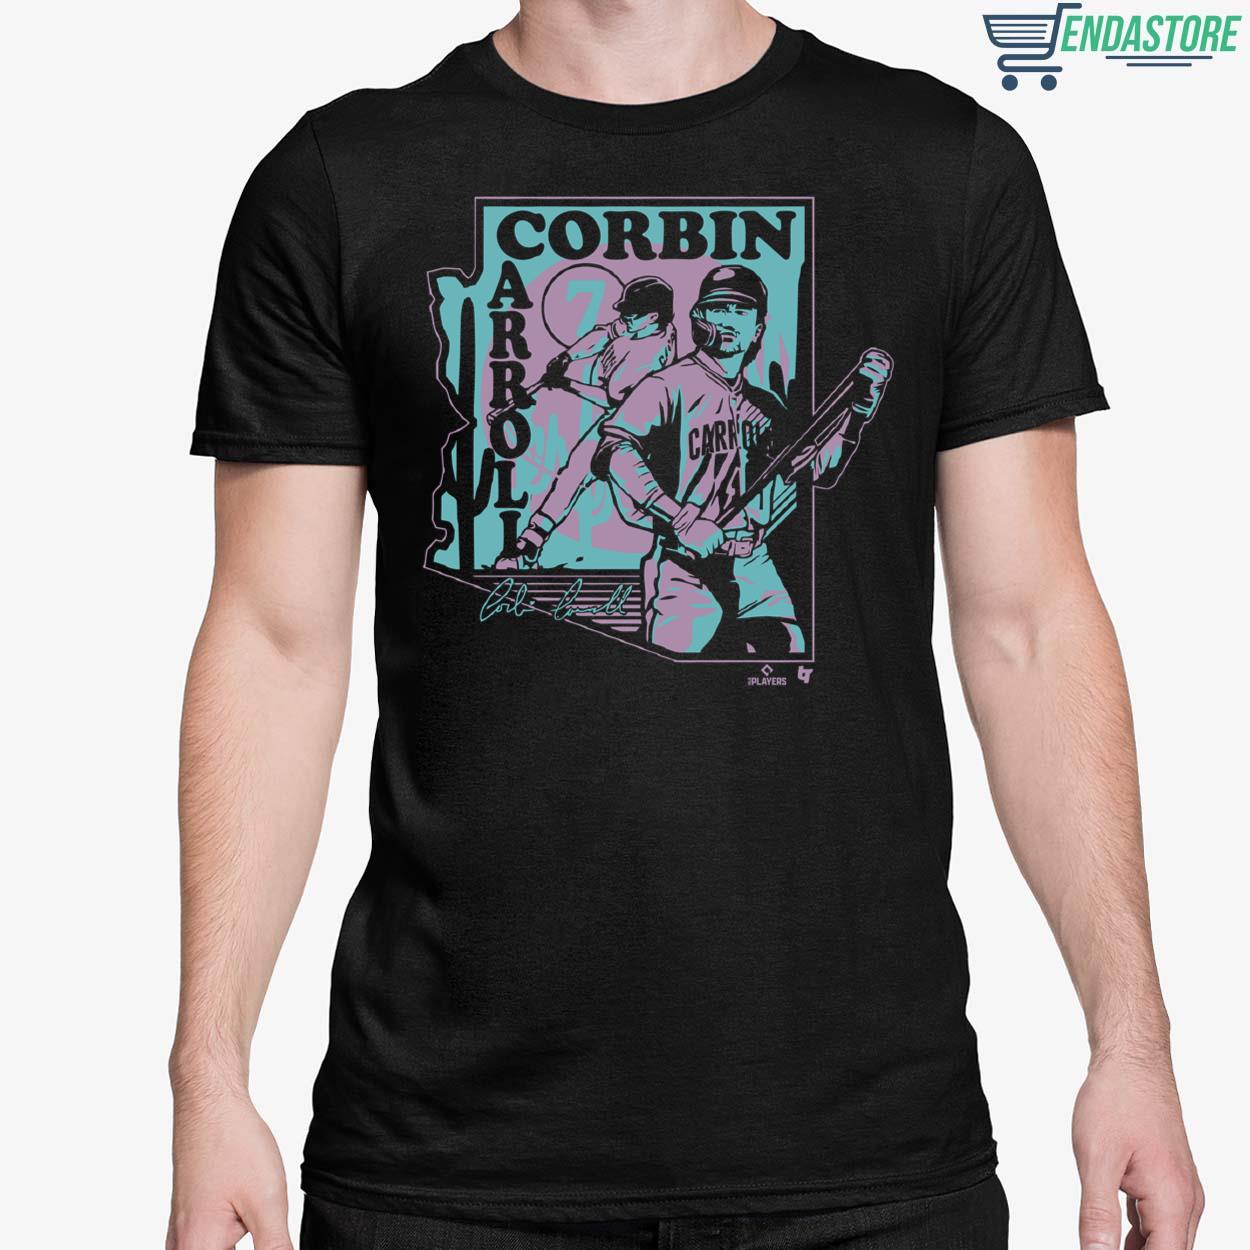 Corbin Carroll Vintage Shirt - Endastore.com